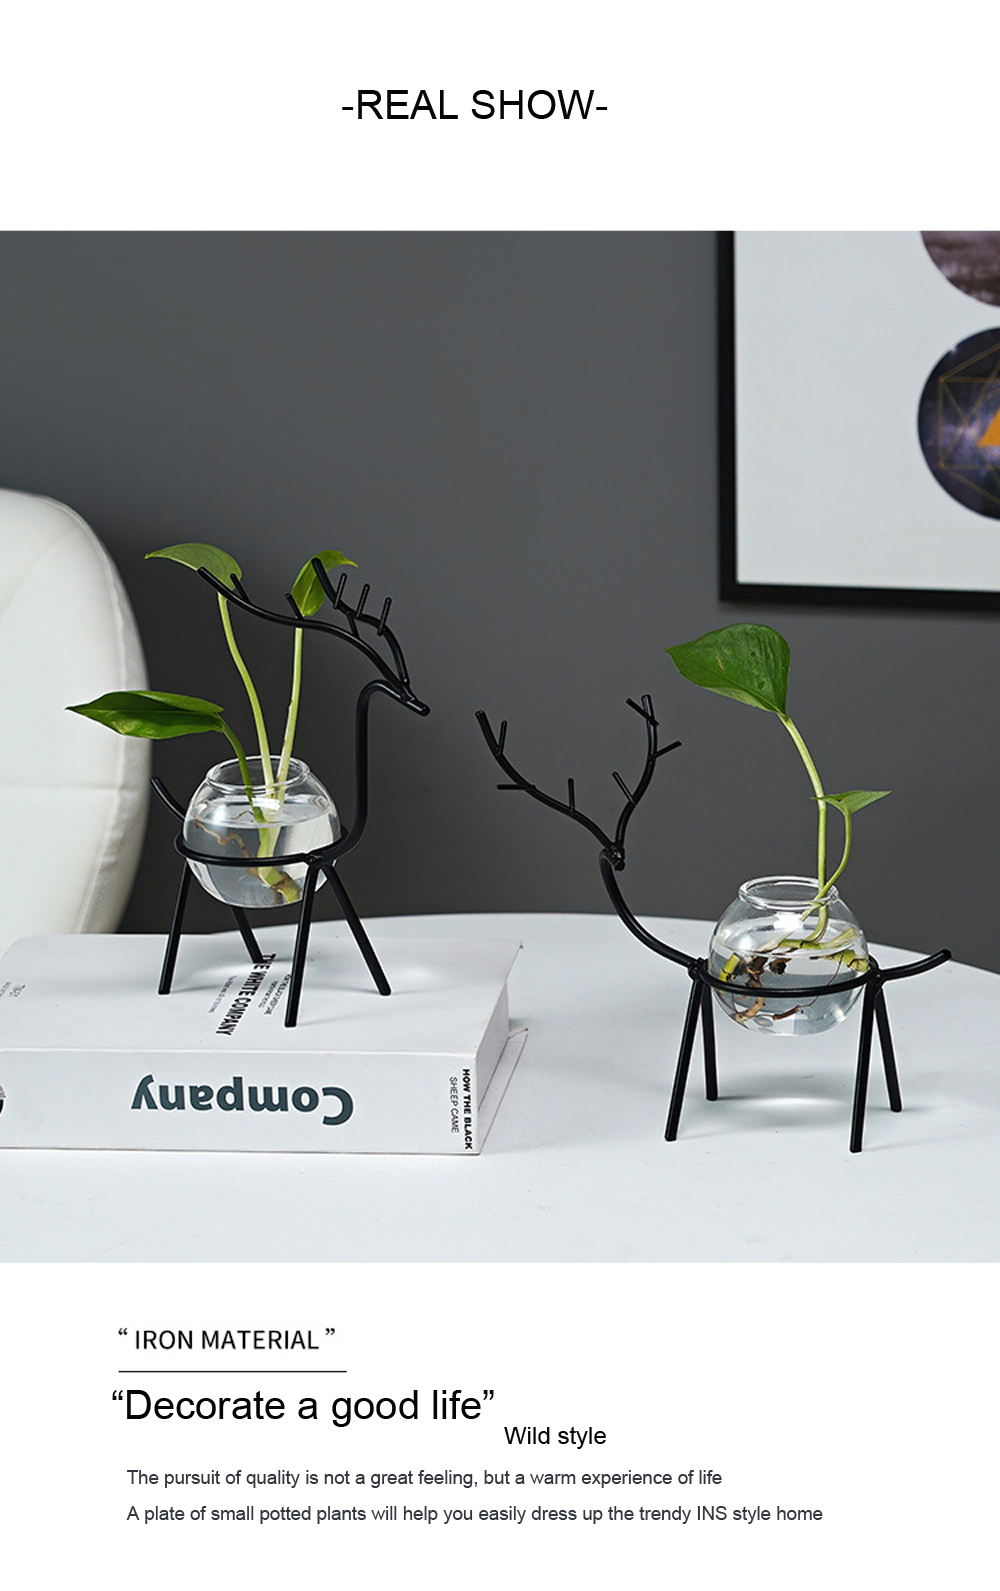 Desktop-Hydroponic-Vase-Flowerpot-Decoration-Fresh-Desktop-Small-Fish-Tank-Office-Desk-Living-Room-C-1744594-3